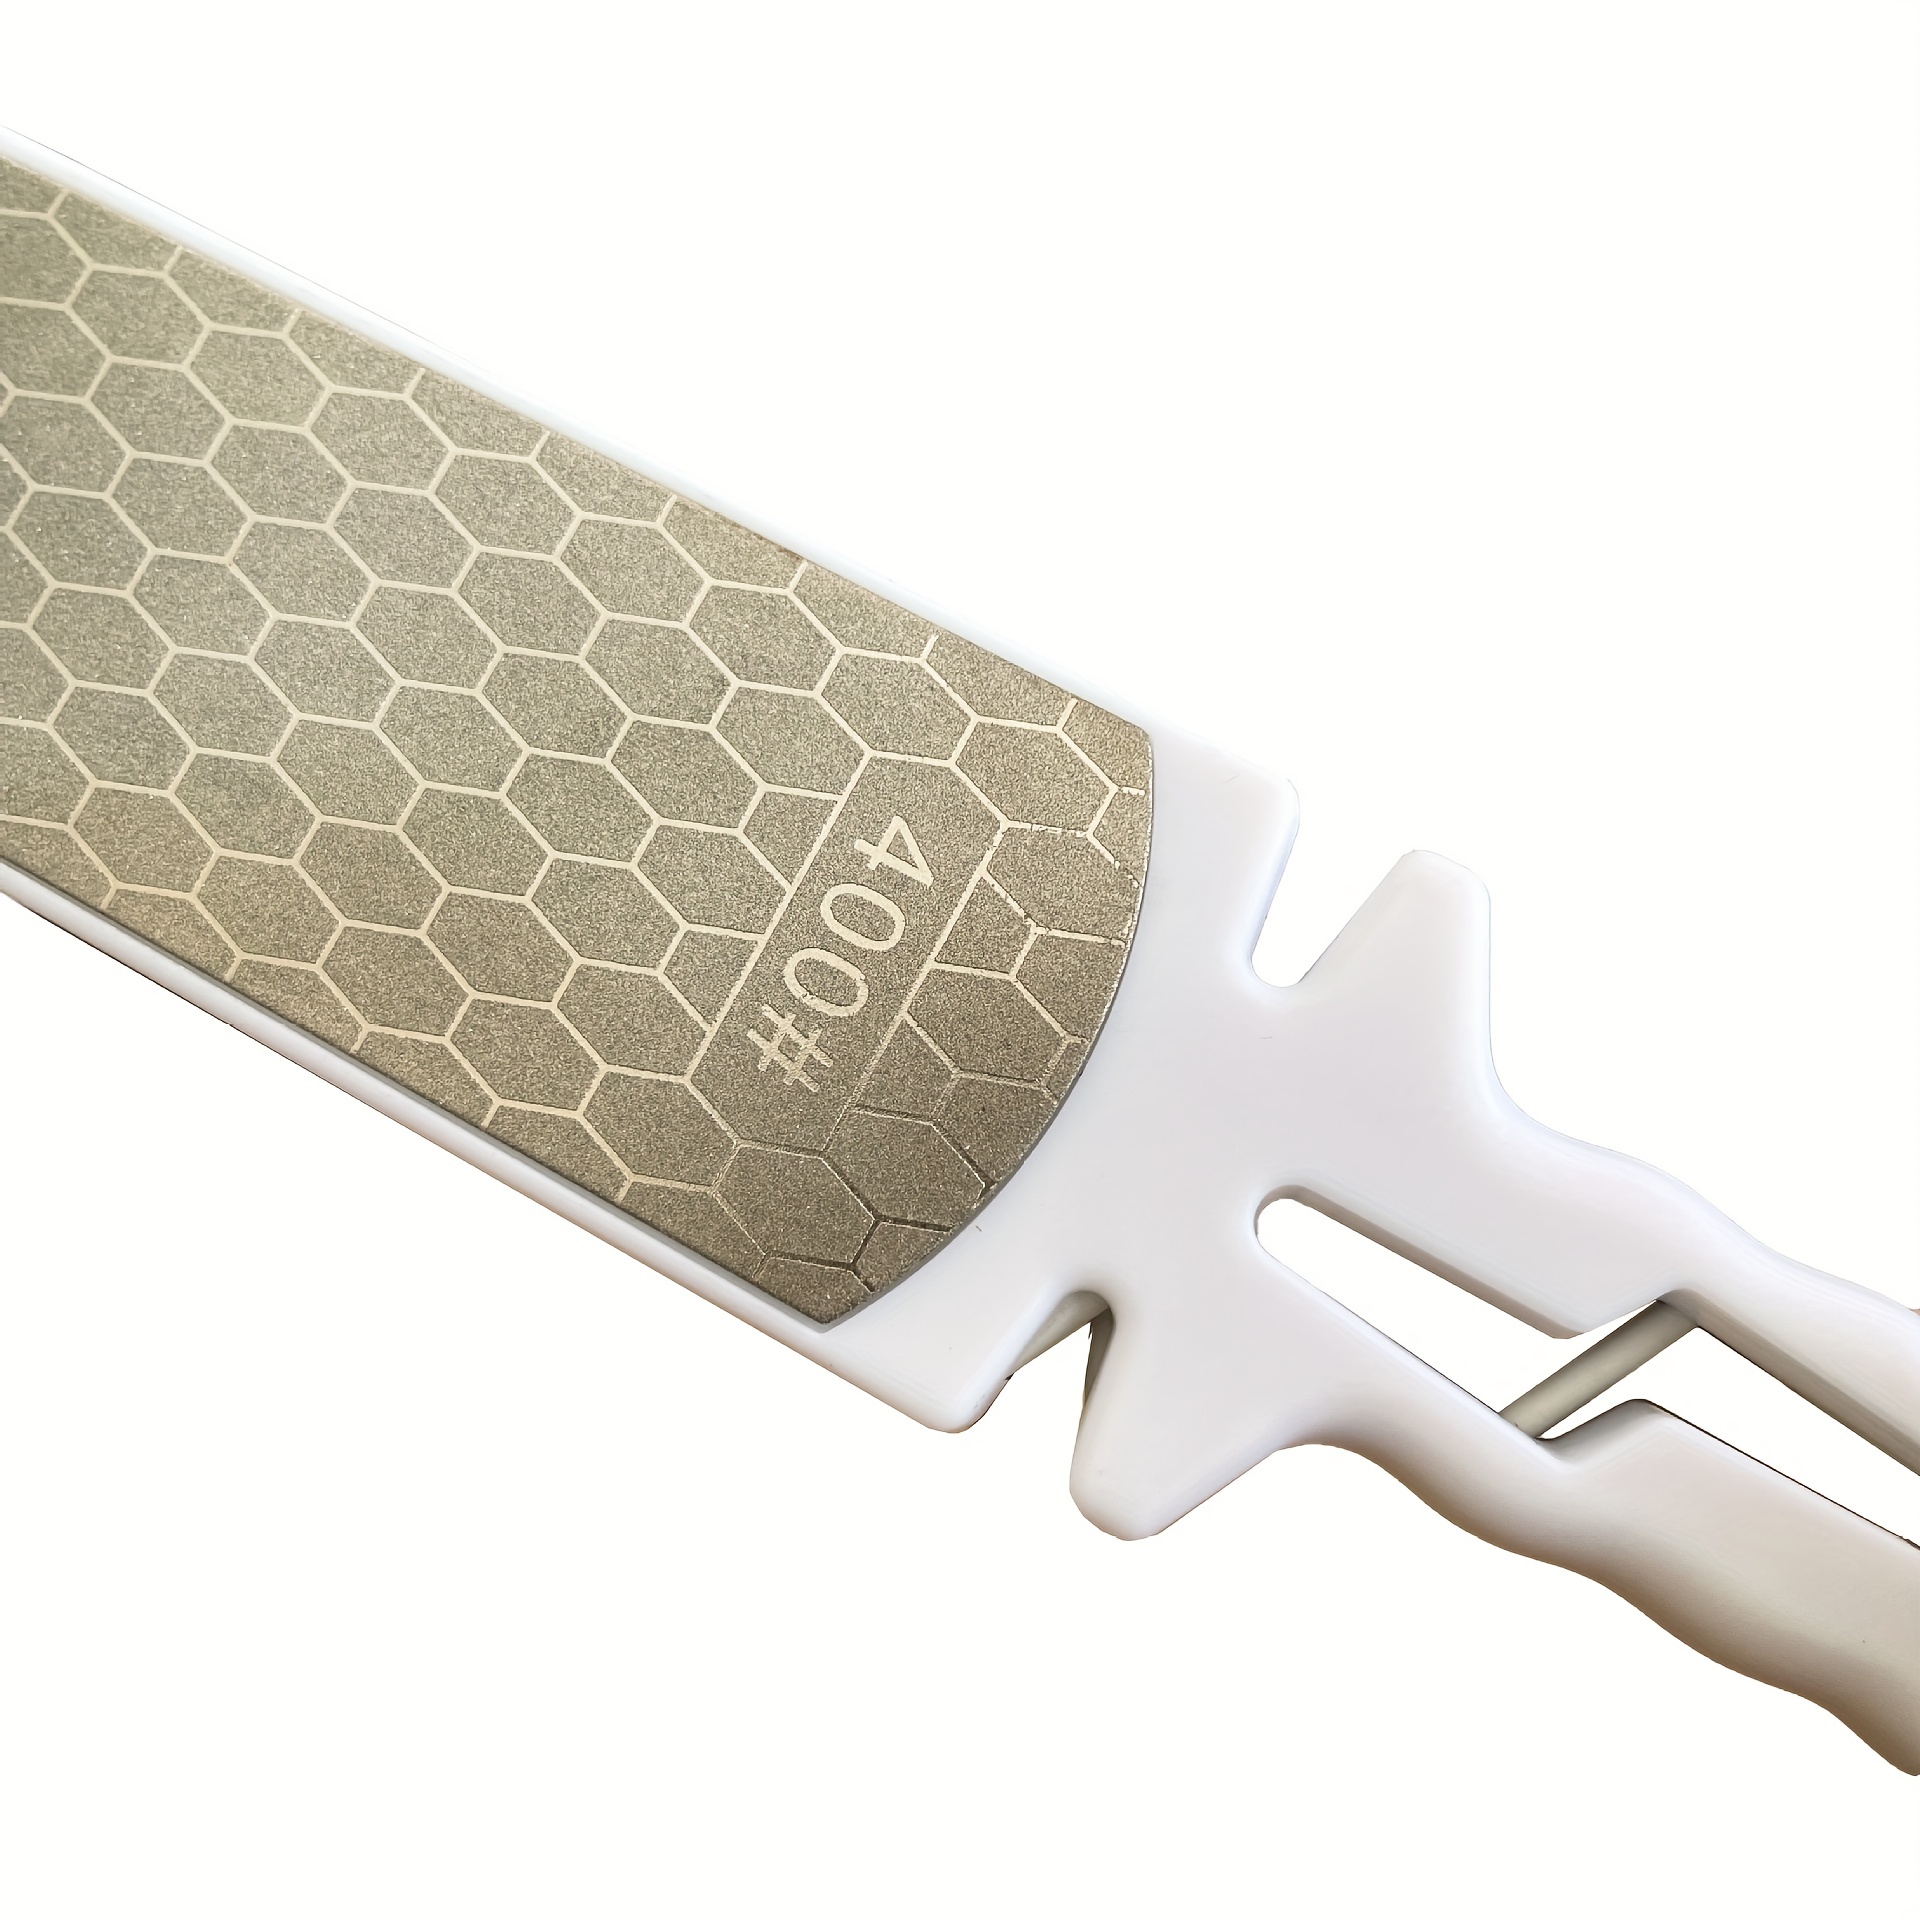 400/1000 Grit Double-sided Diamond Sharpening Stone, Knife Sharpener Stone  Whetstone For Scissors Knives Outdoor Kitchen Sharpen Tools